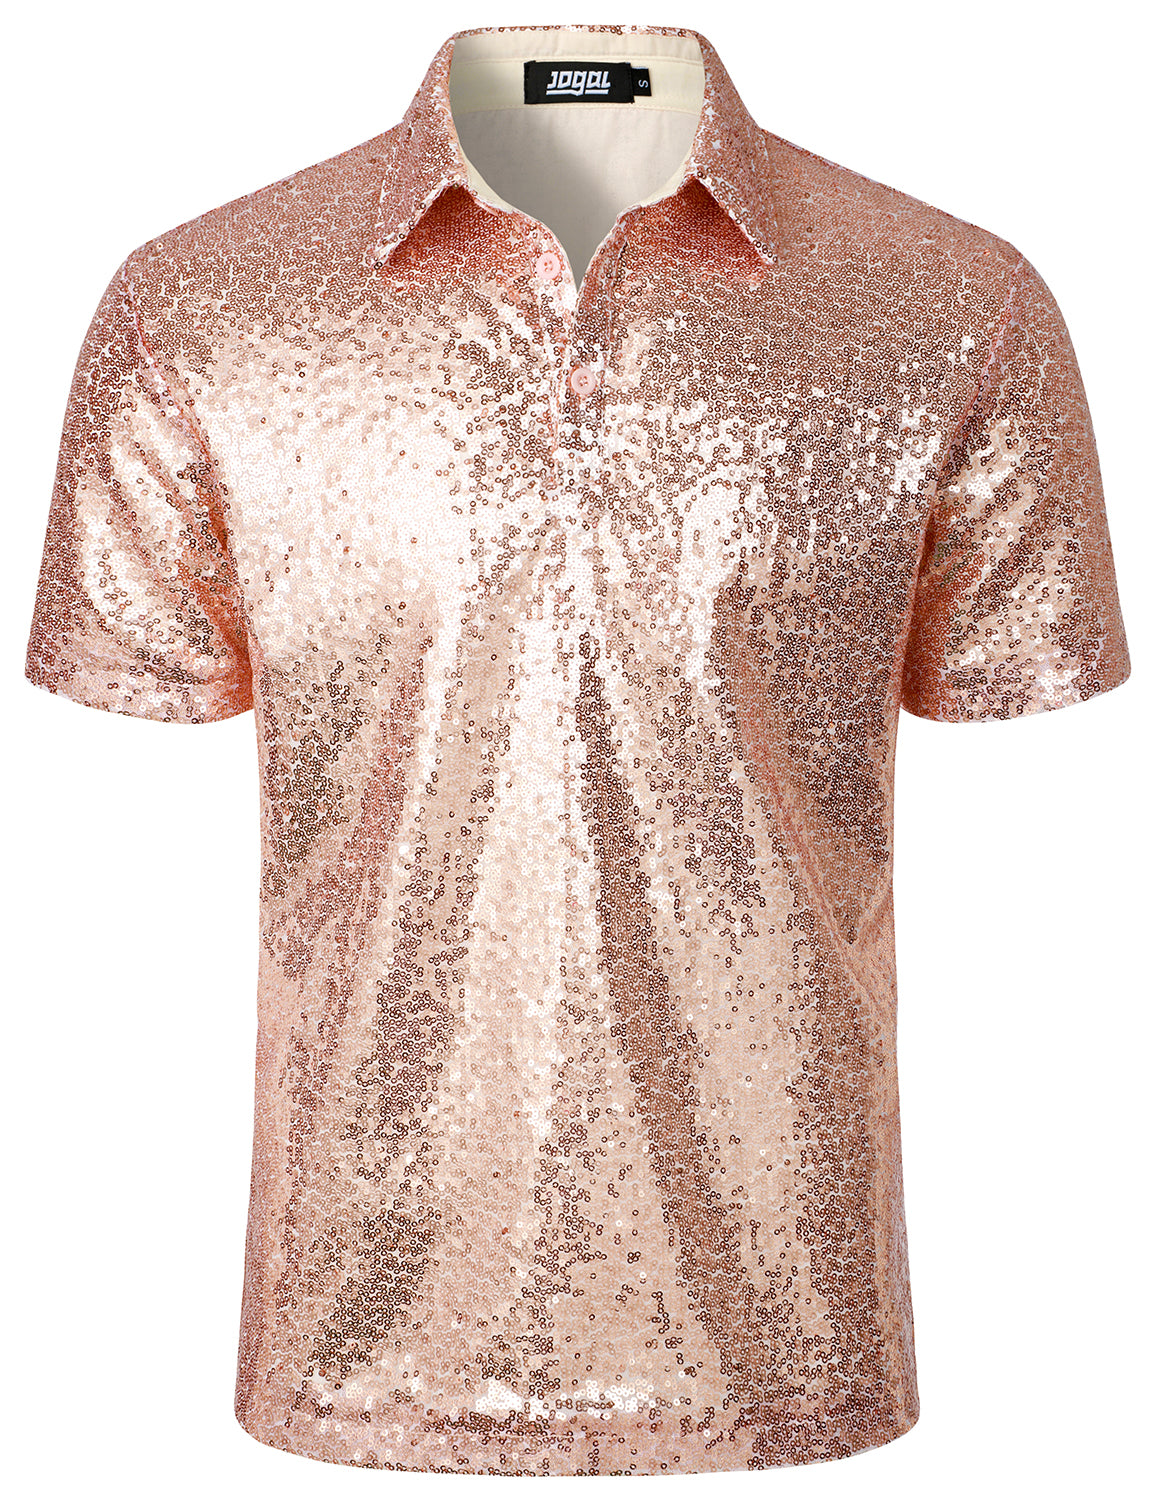 JOGAL Mens 70s Disco Polo Shirts Short Sleeve Metallic Shiny Sequins Party Nightclub Costume Collared T-Shirt